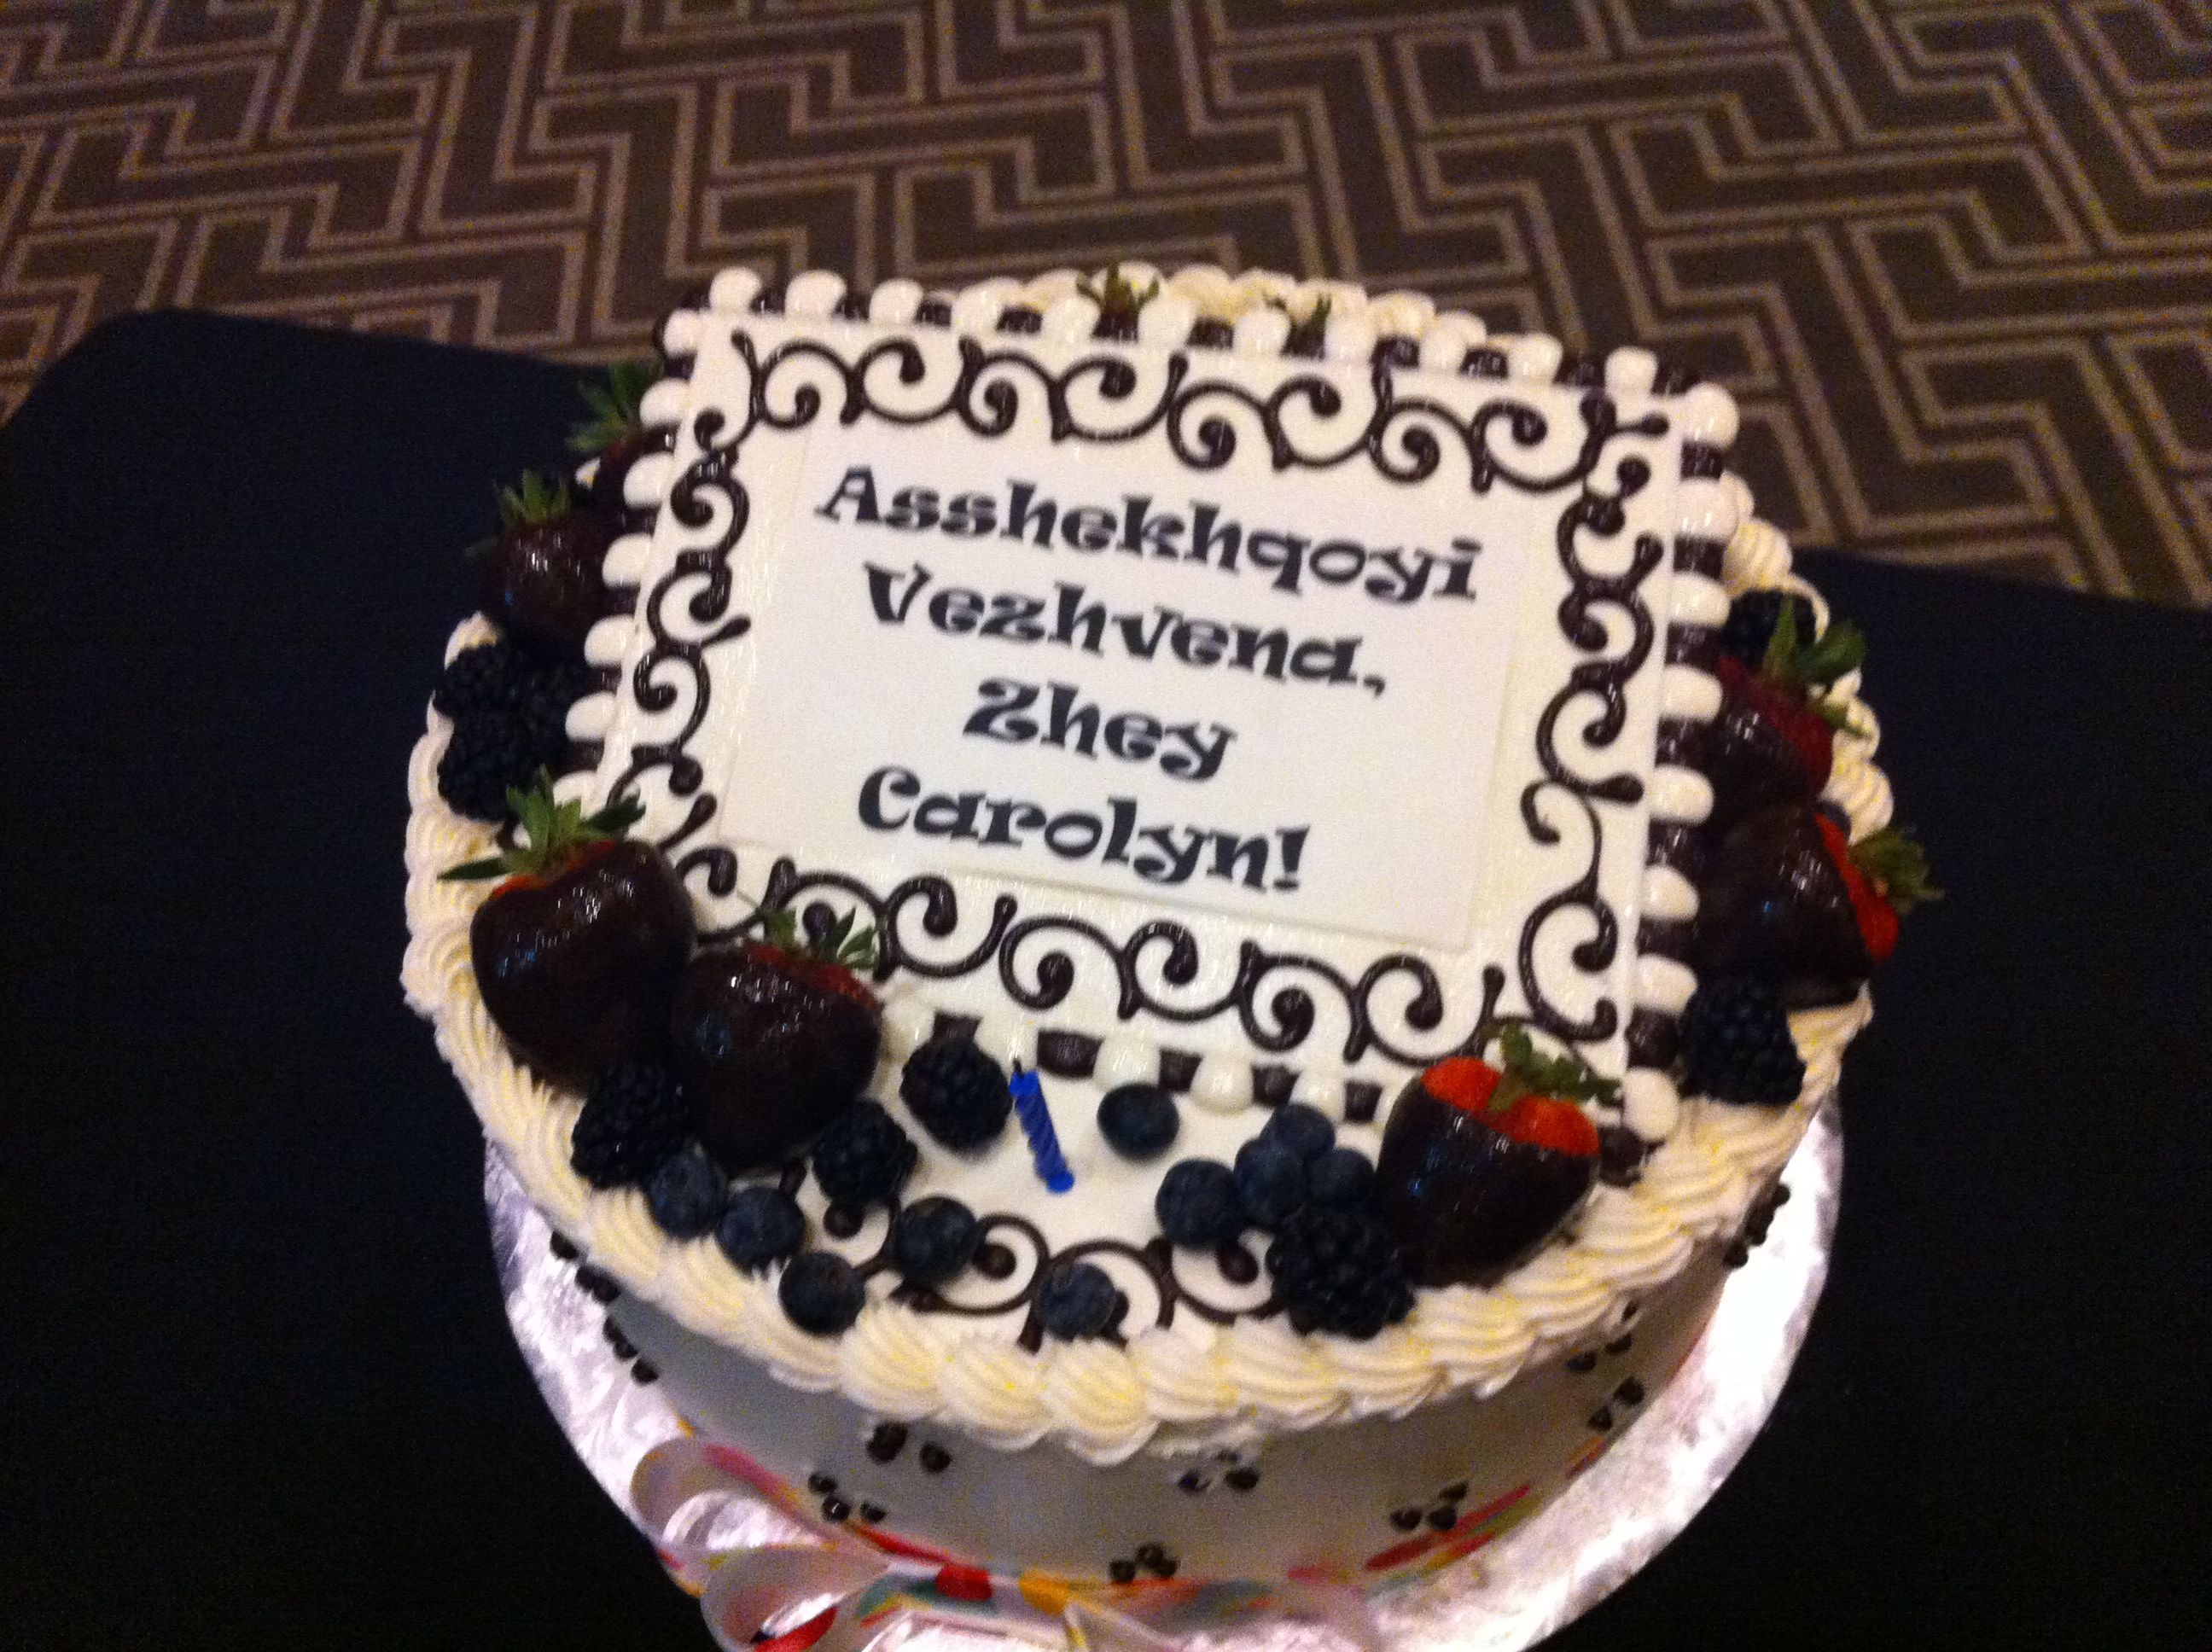 A cake with "Asshekhqoyi vezhvena, zhey Carolyn!" written on it.